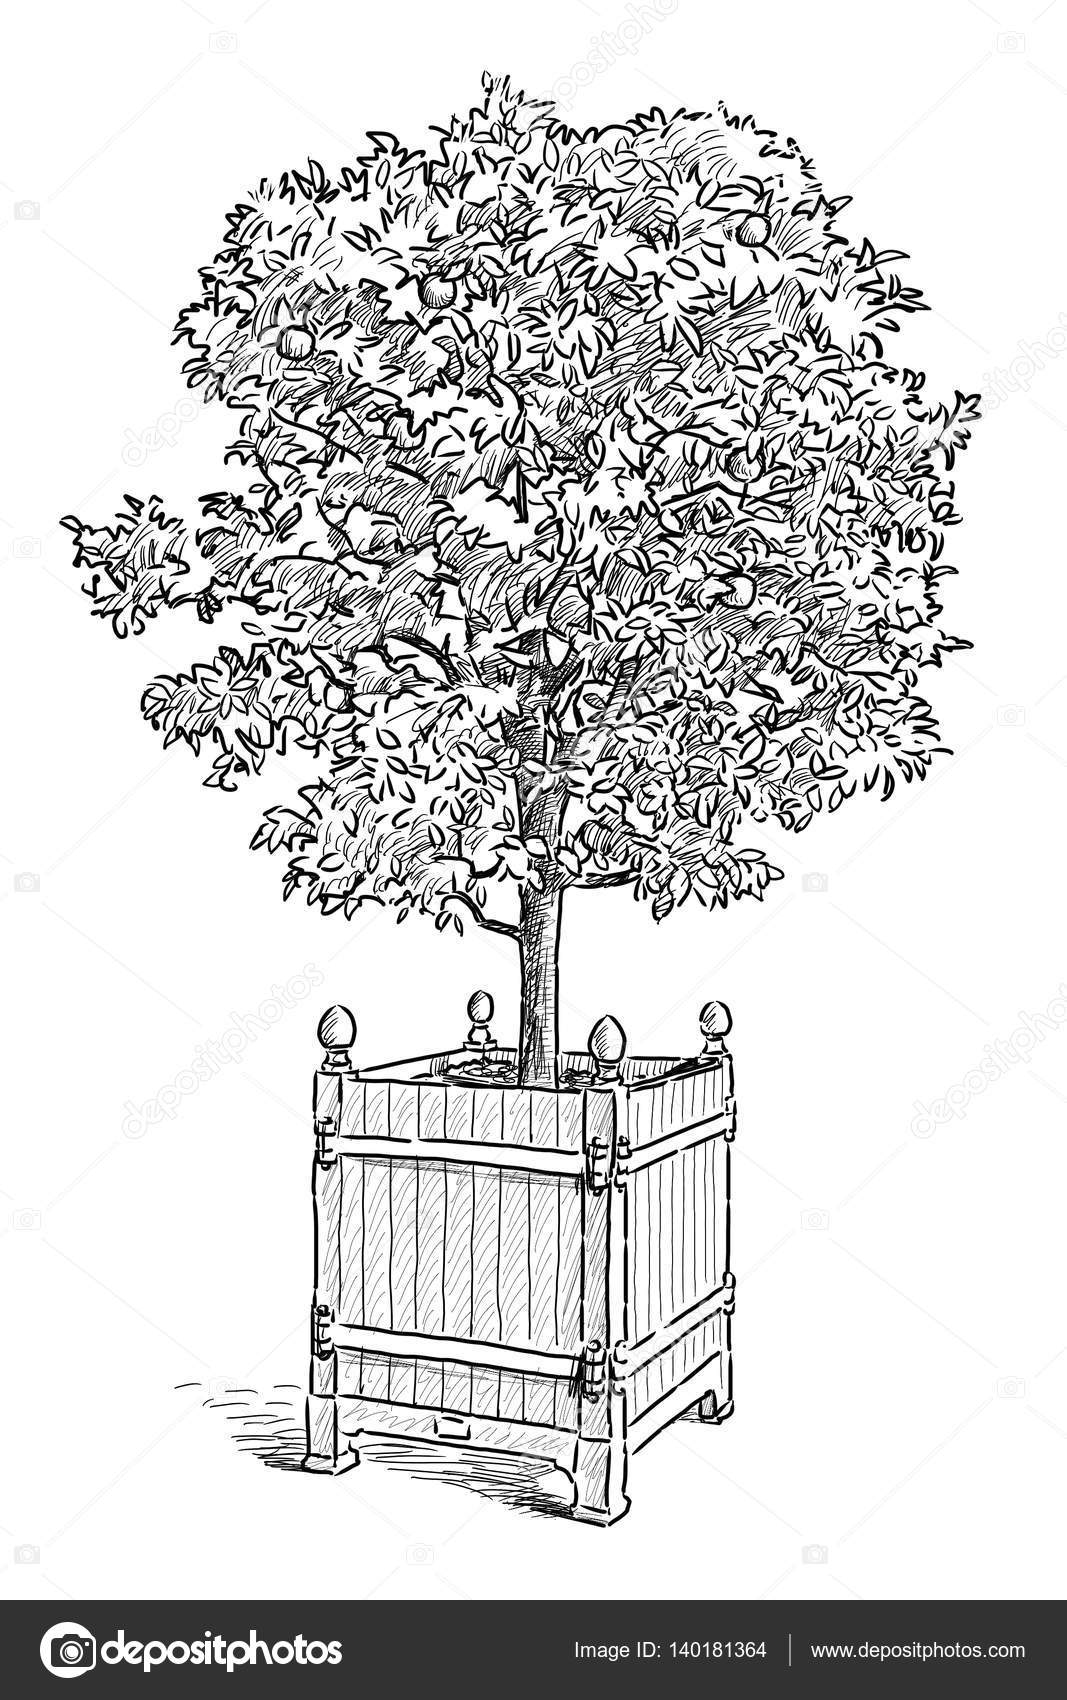 Images Orange Tree Sketch Sketch Of An Orange Tree In The Flowerpot Stock Photo C Mubaister Gmail Com